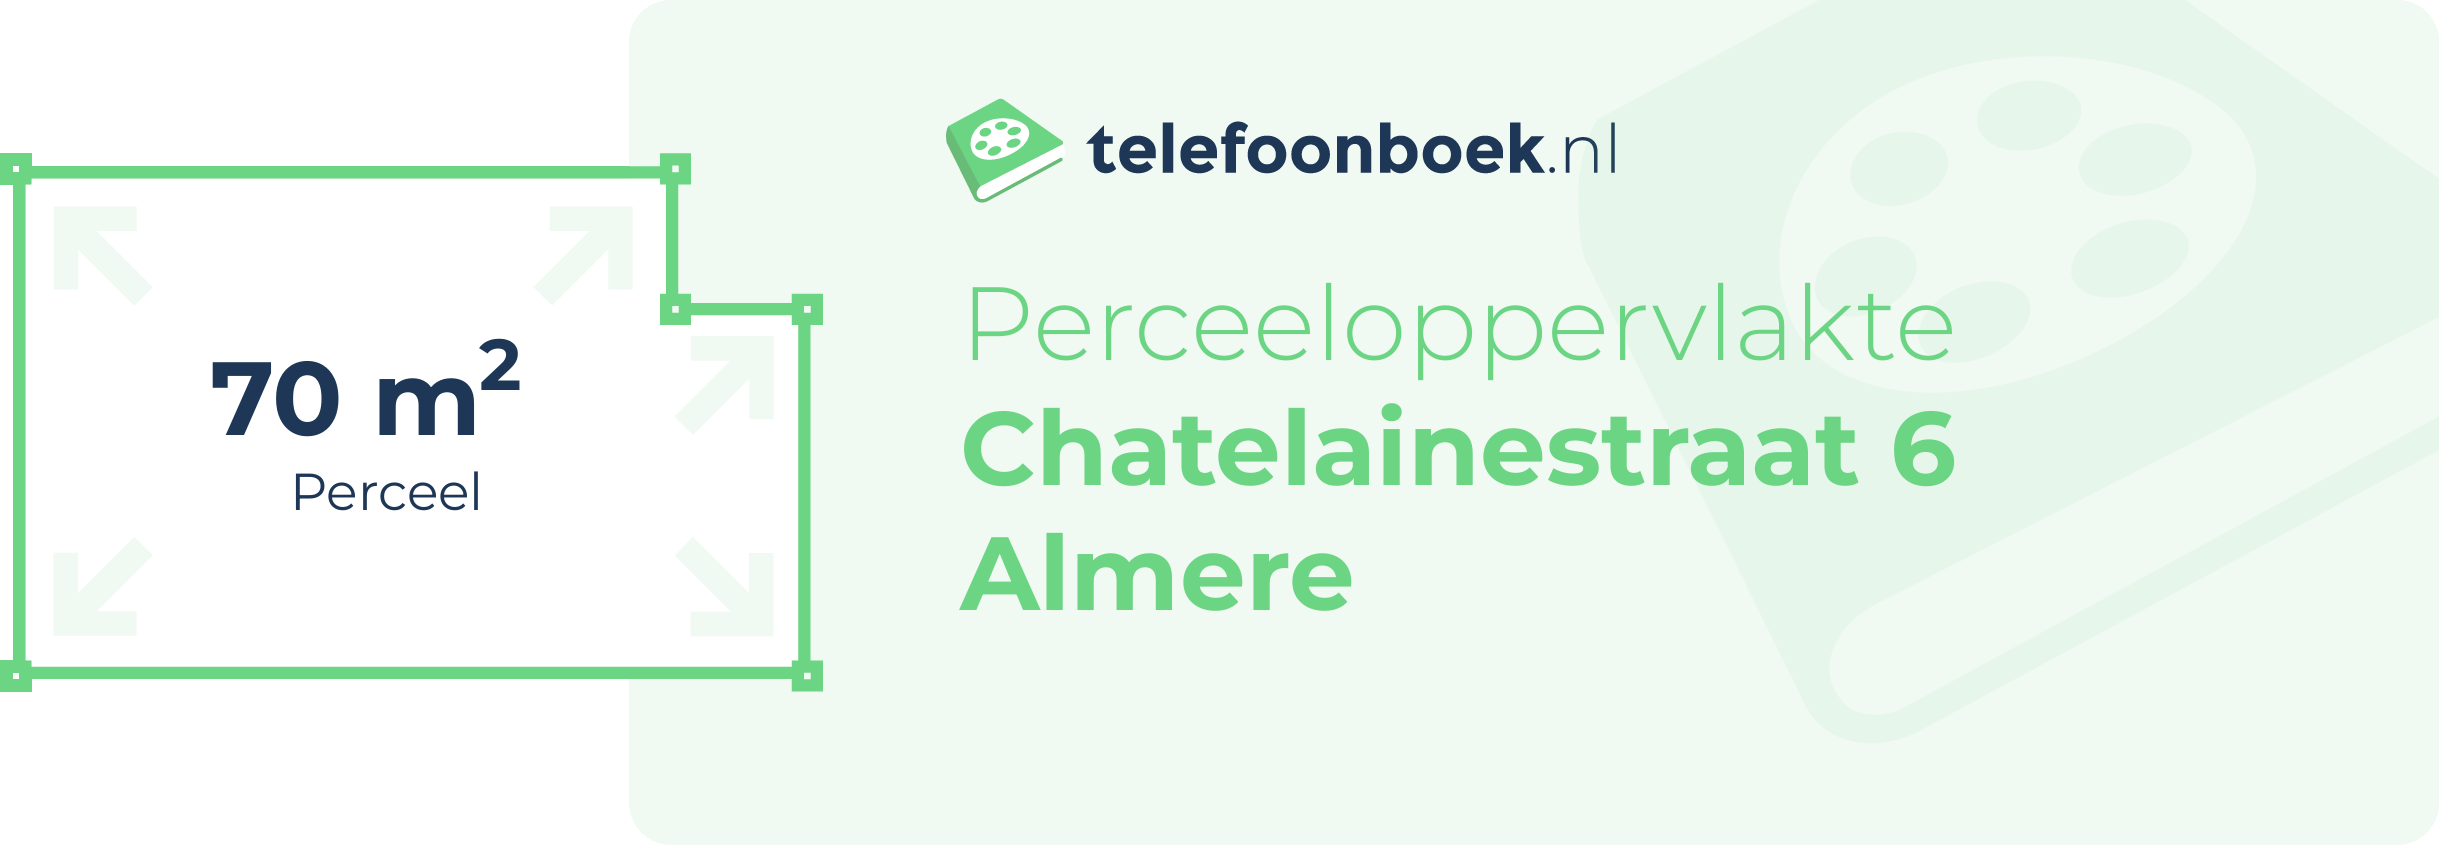 Perceeloppervlakte Chatelainestraat 6 Almere